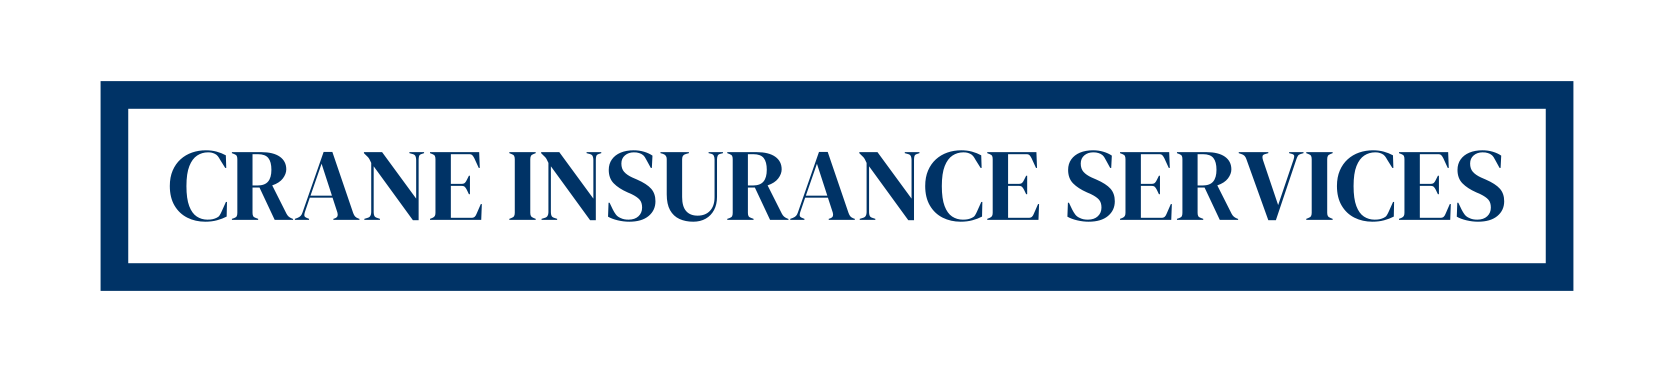 crane-insurance-services-logo